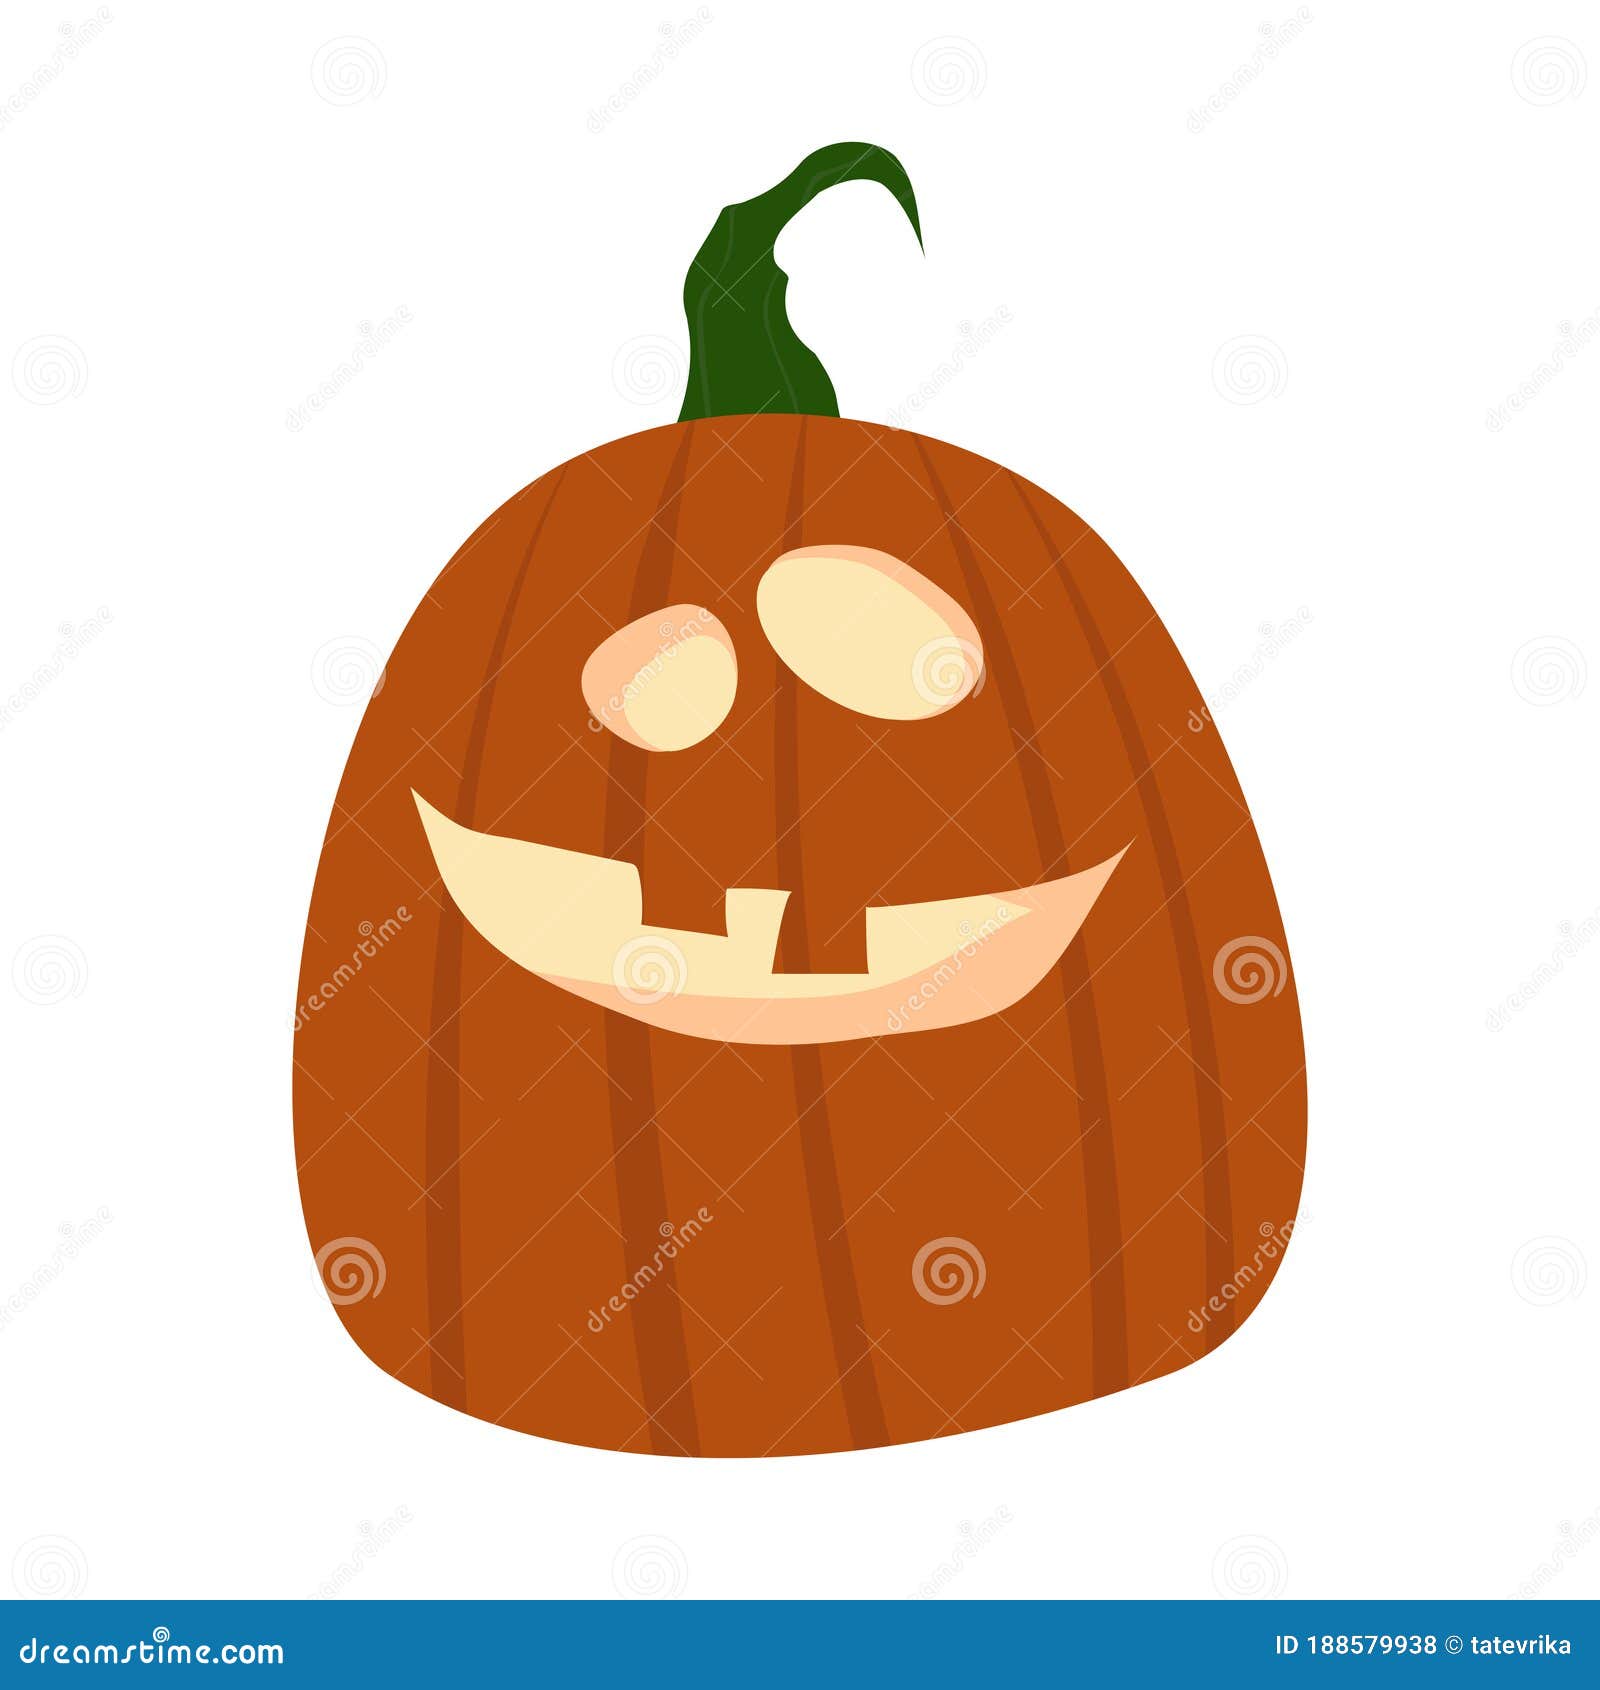 Halloween Pumpkin Funny and Cute. Vector Illustration Stock Vector ...